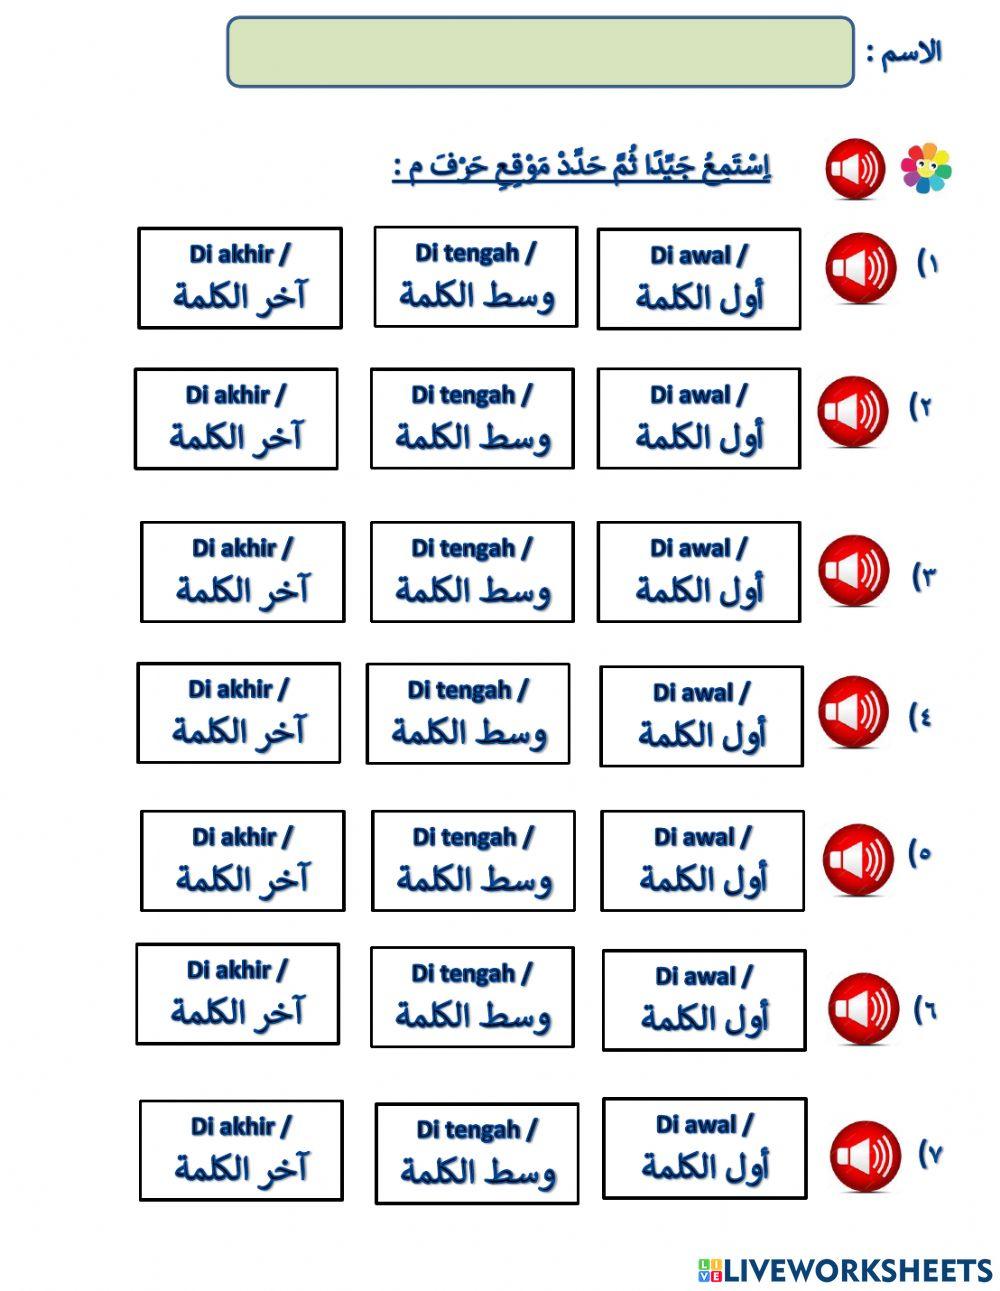 Latihan bahasa arab fokus huruf mim